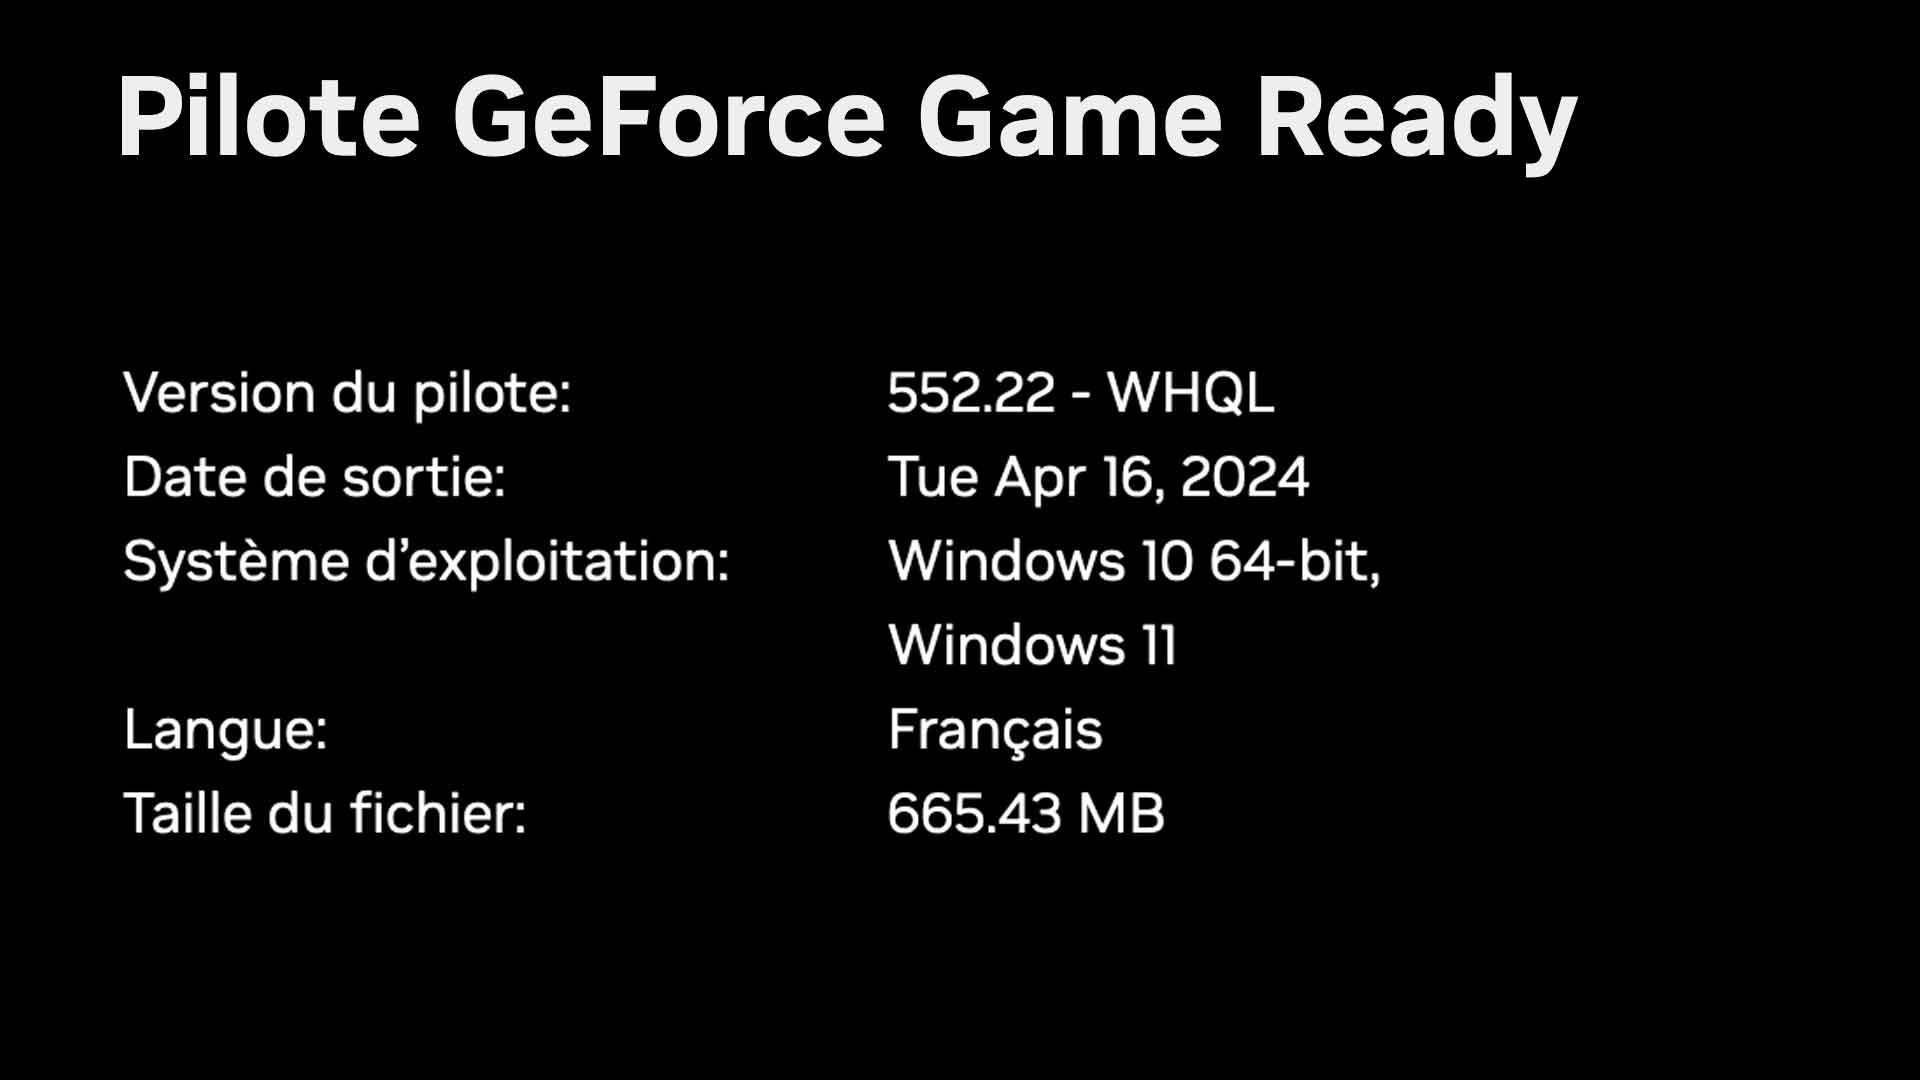 Pilotes graphiques GeForce 552.22 WHQL Game Ready de Nvidia